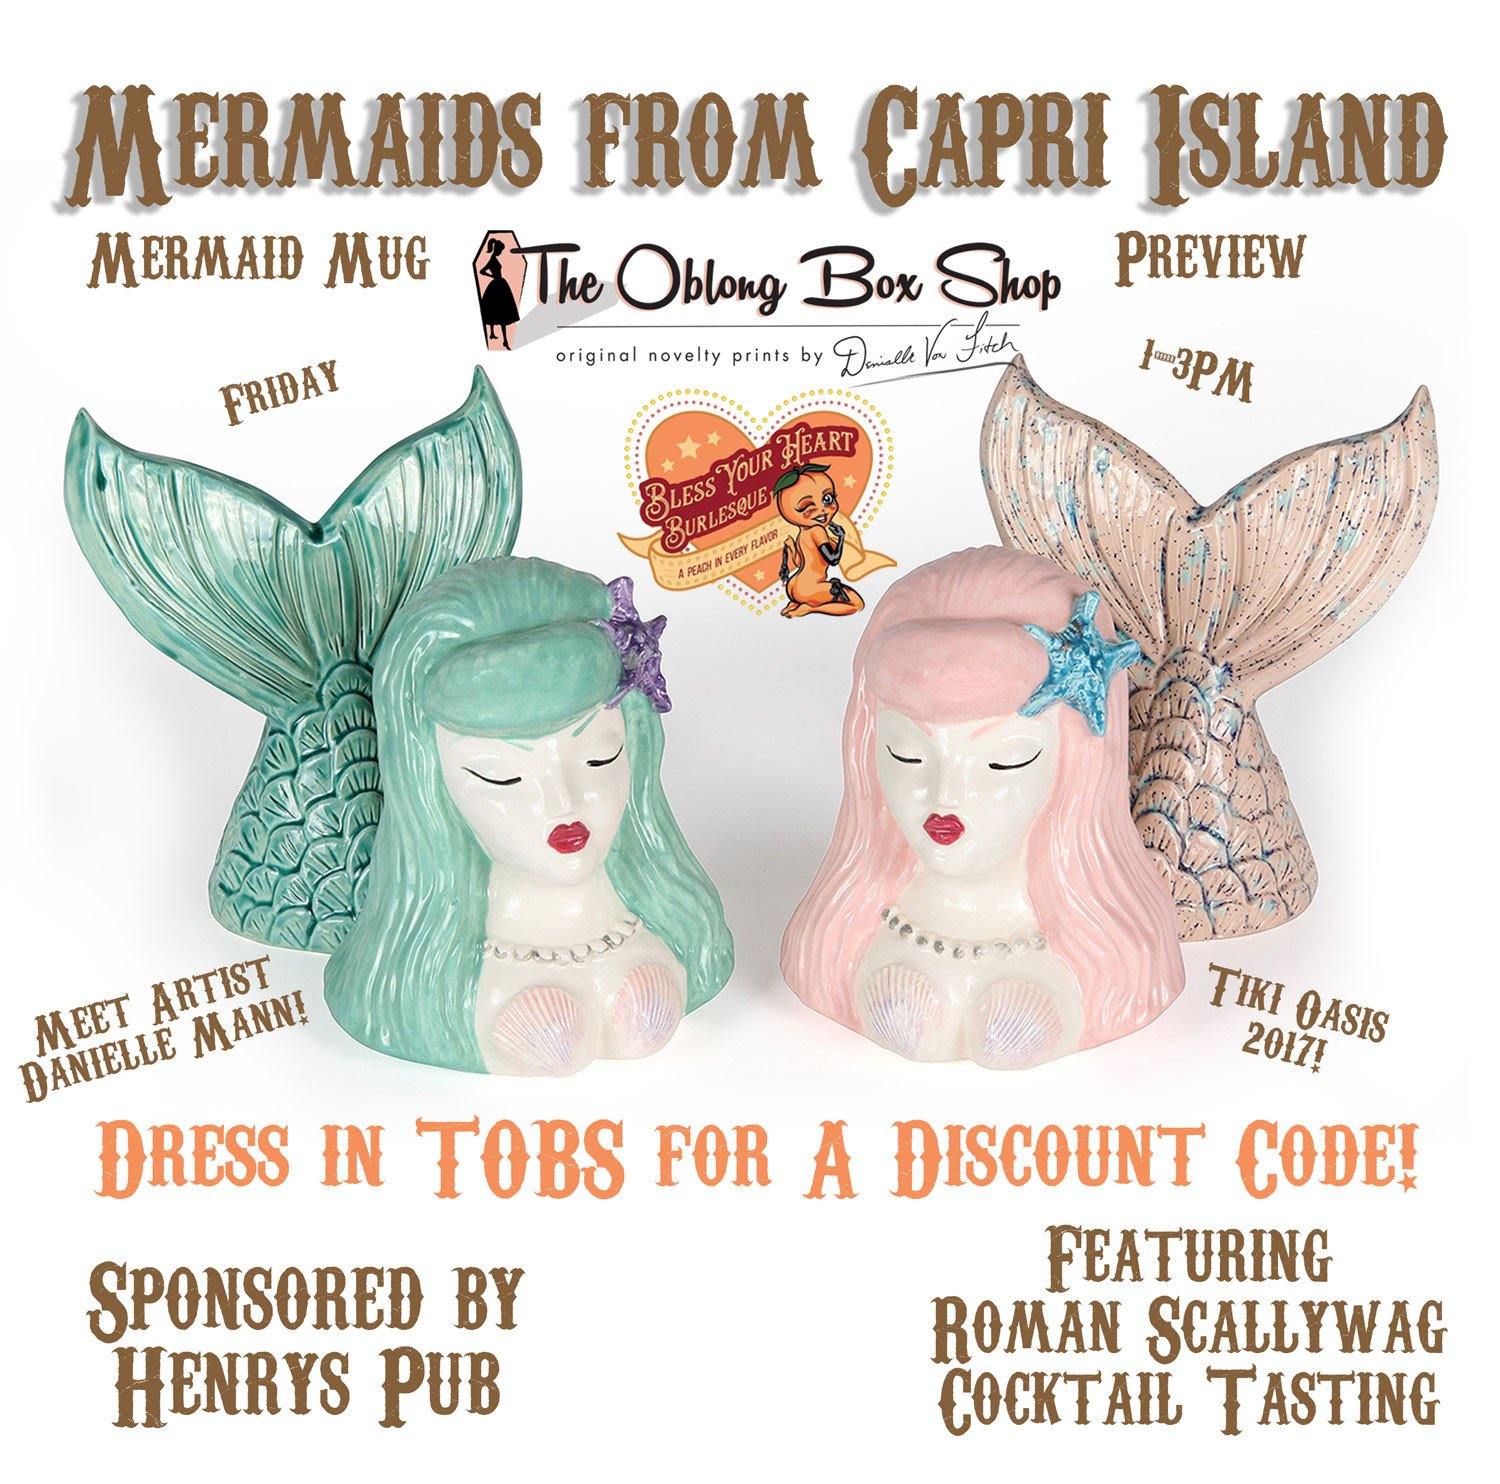 Mermaids From Capri Island Mermaid Mug Preview Party - The Oblong Box Shop